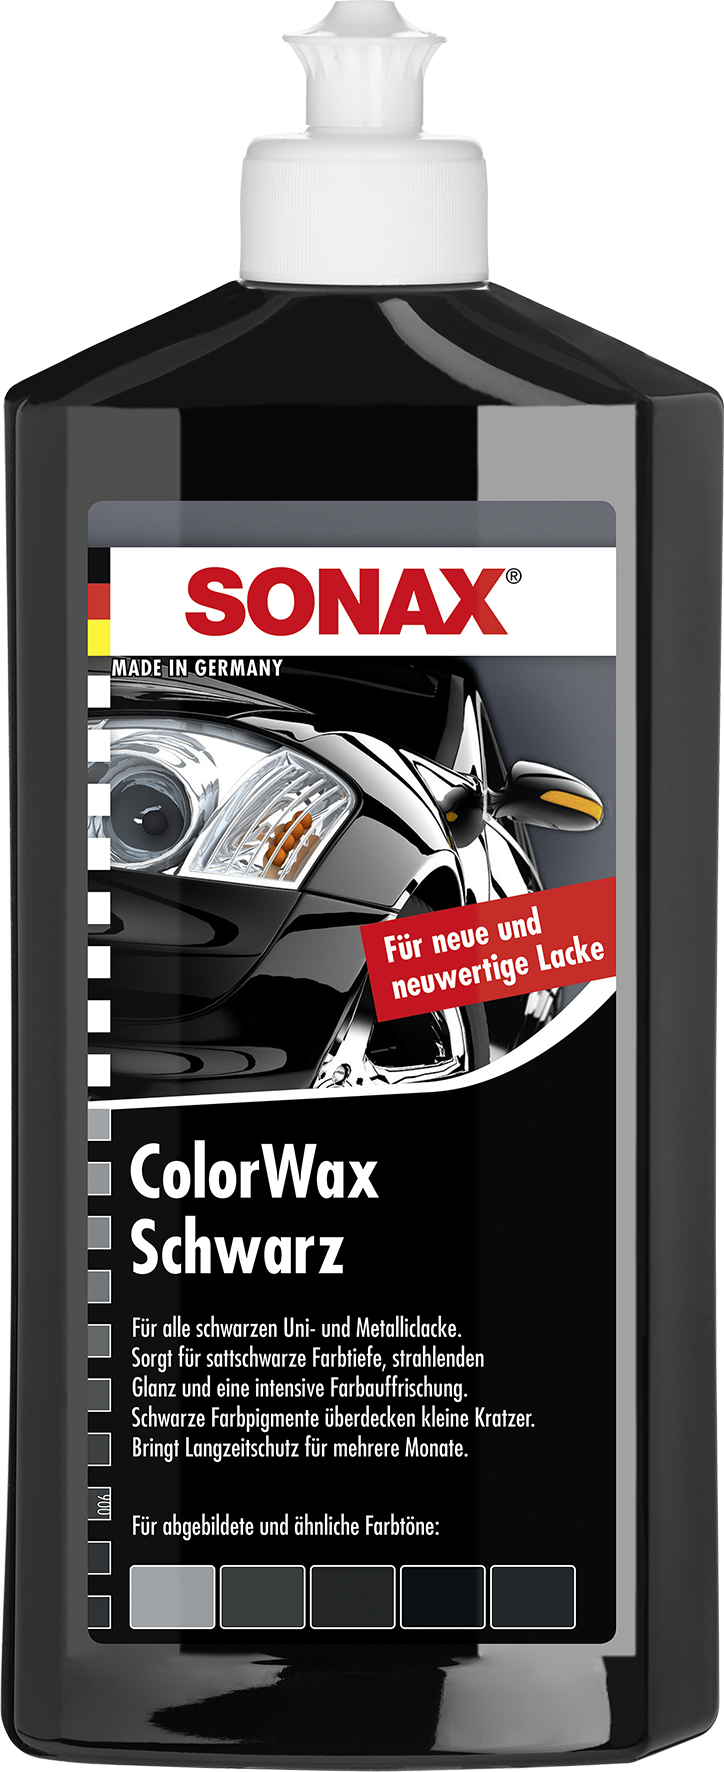 Policeman Devise leak Product image download - SONAX Media - site 2